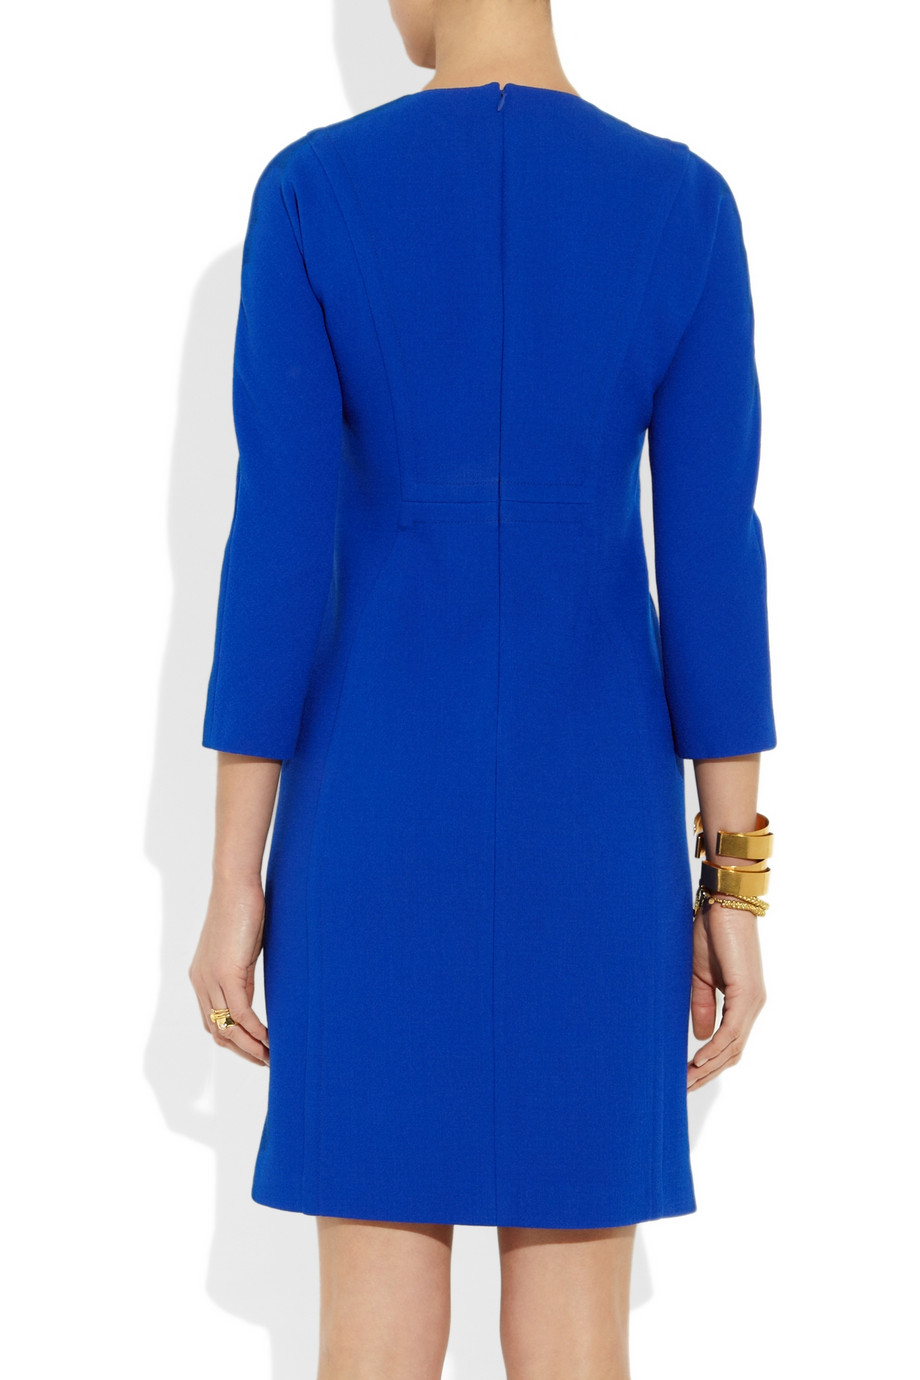 Michael kors Stretch Wool-Crepe Dress in Blue (sapphire) | Lyst